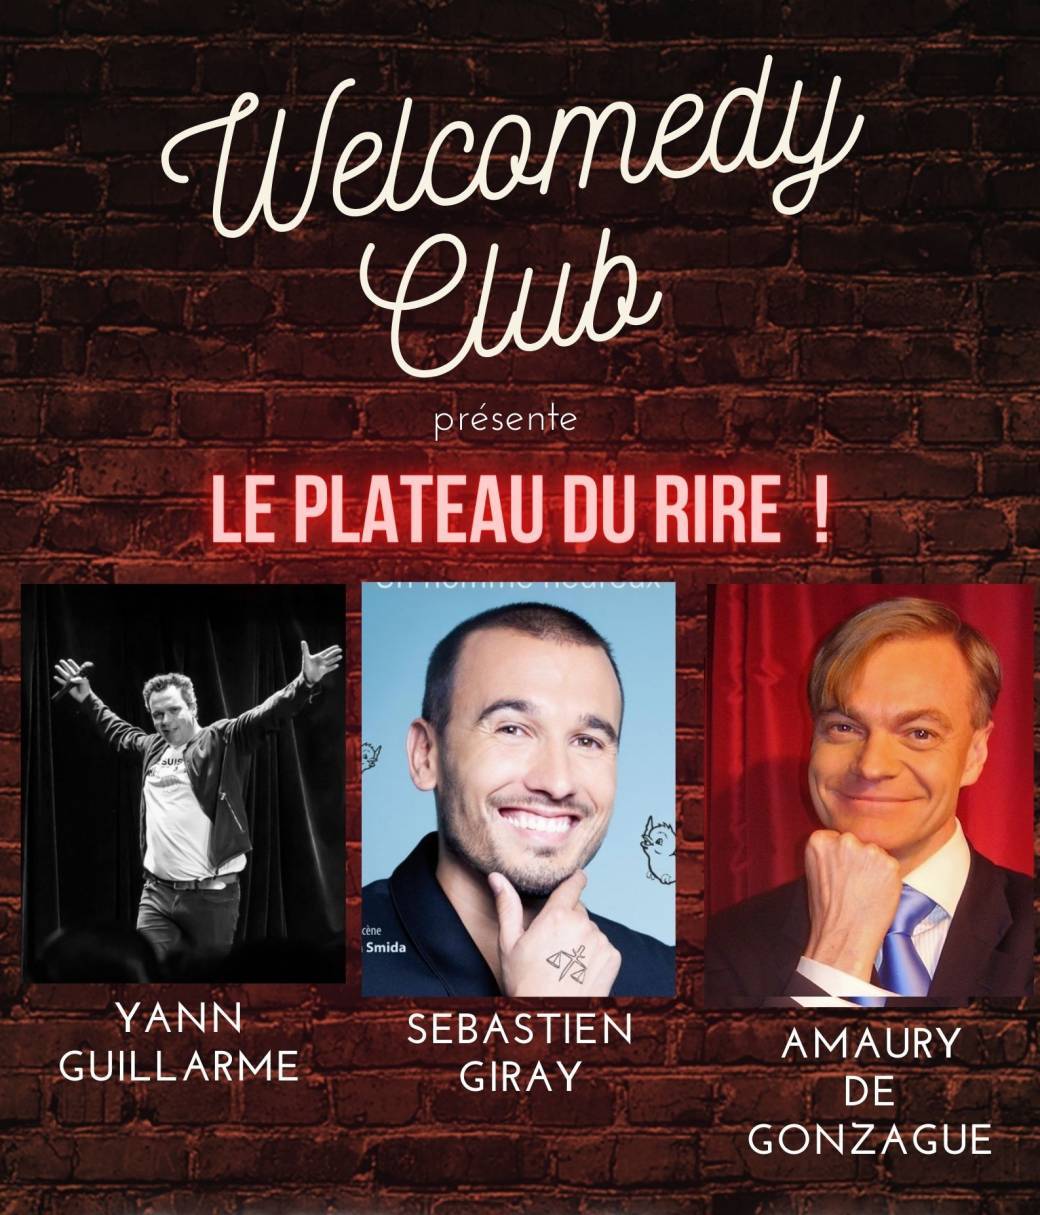 Welcomedy club - le plateau GIRAY